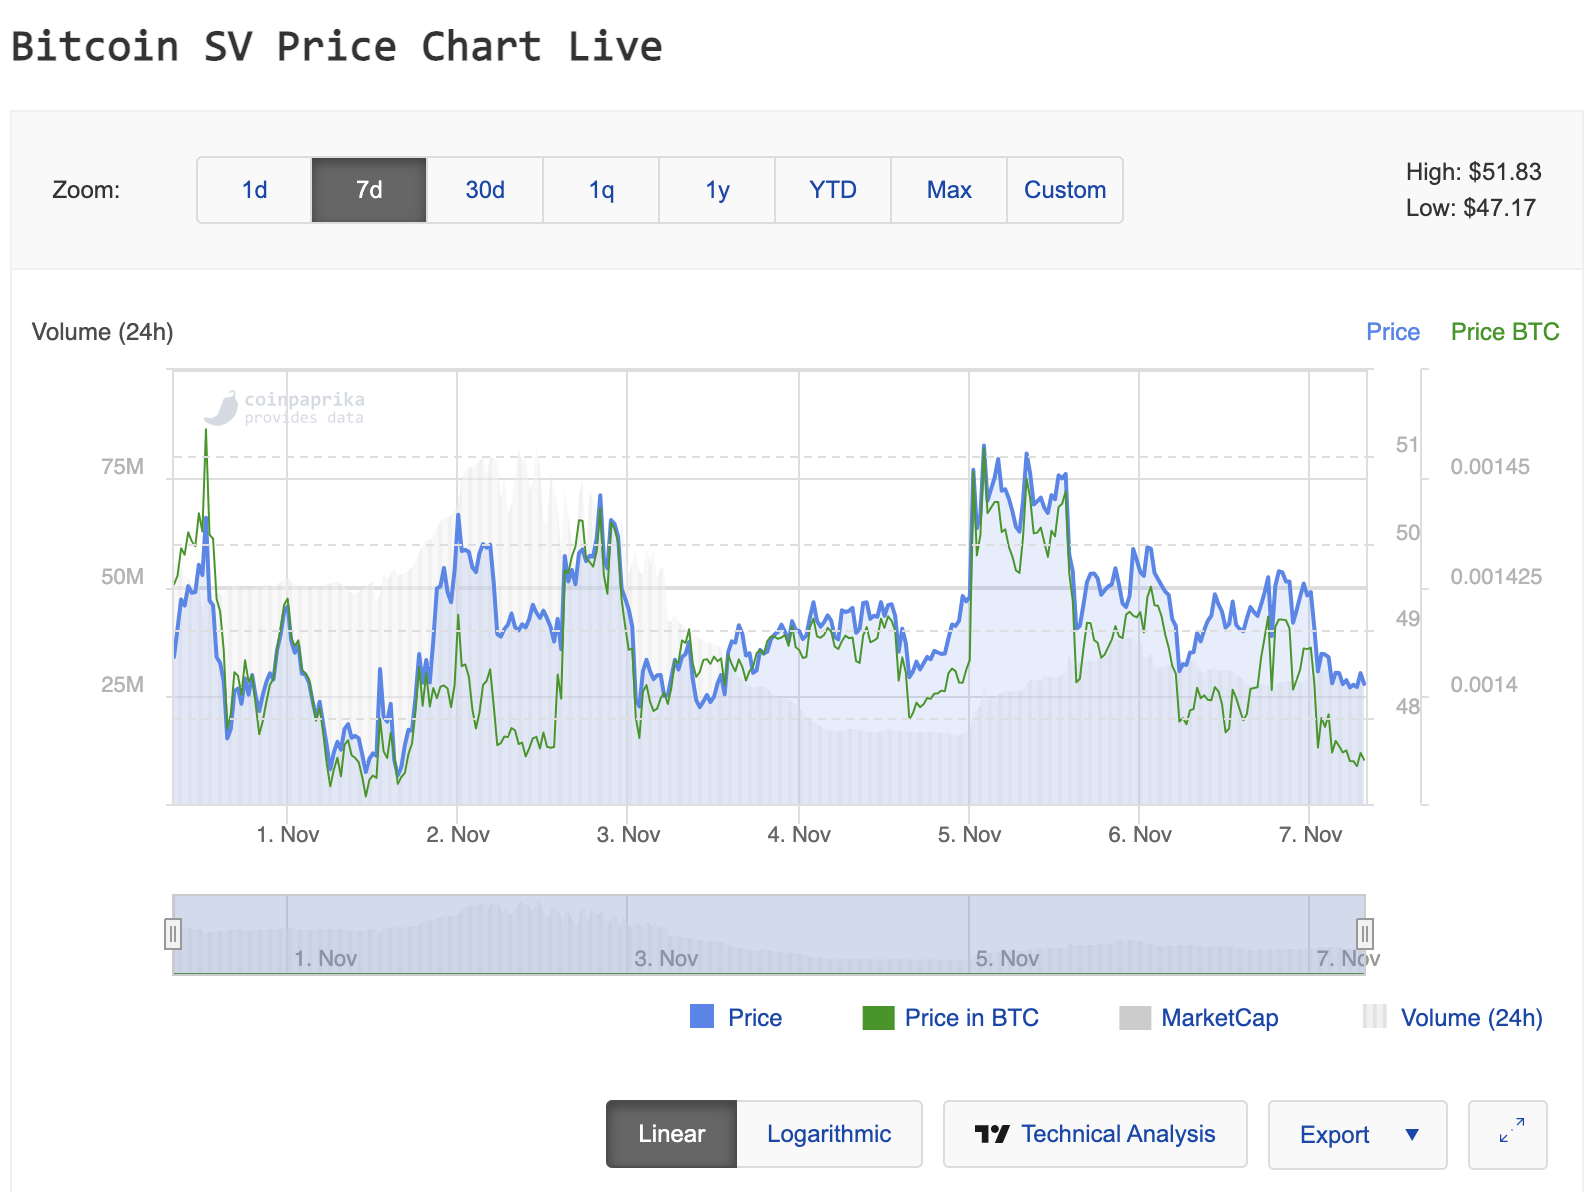 Bitcoin SV USD (BSV-USD) Price History & Historical Data - Yahoo Finance